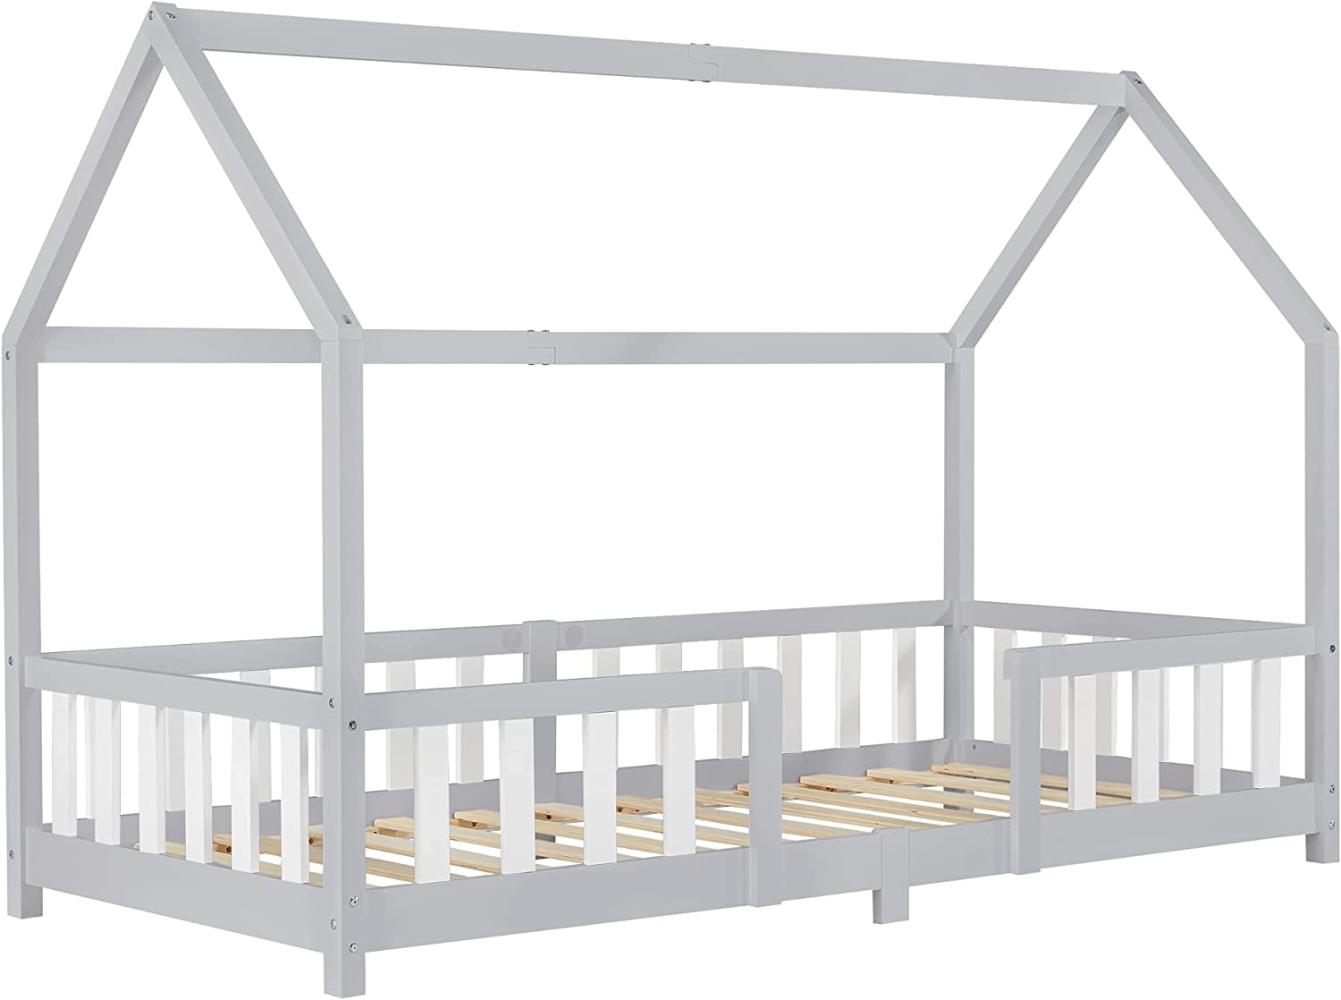 en.casa 'Sisimiut' Hausbett 90x200 cm, grau/weiß, Kieferholz, inkl. Rausfallschutz und Lattenrost Bild 1